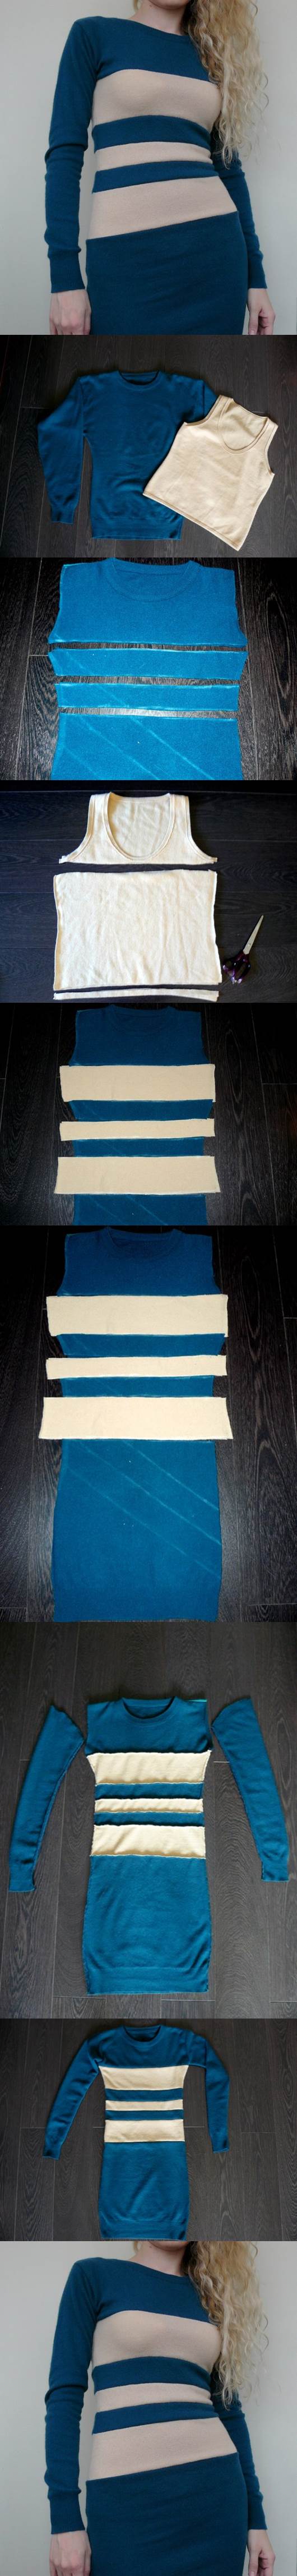 DIY Color Block Dress from Sweatshirt and Tank 2